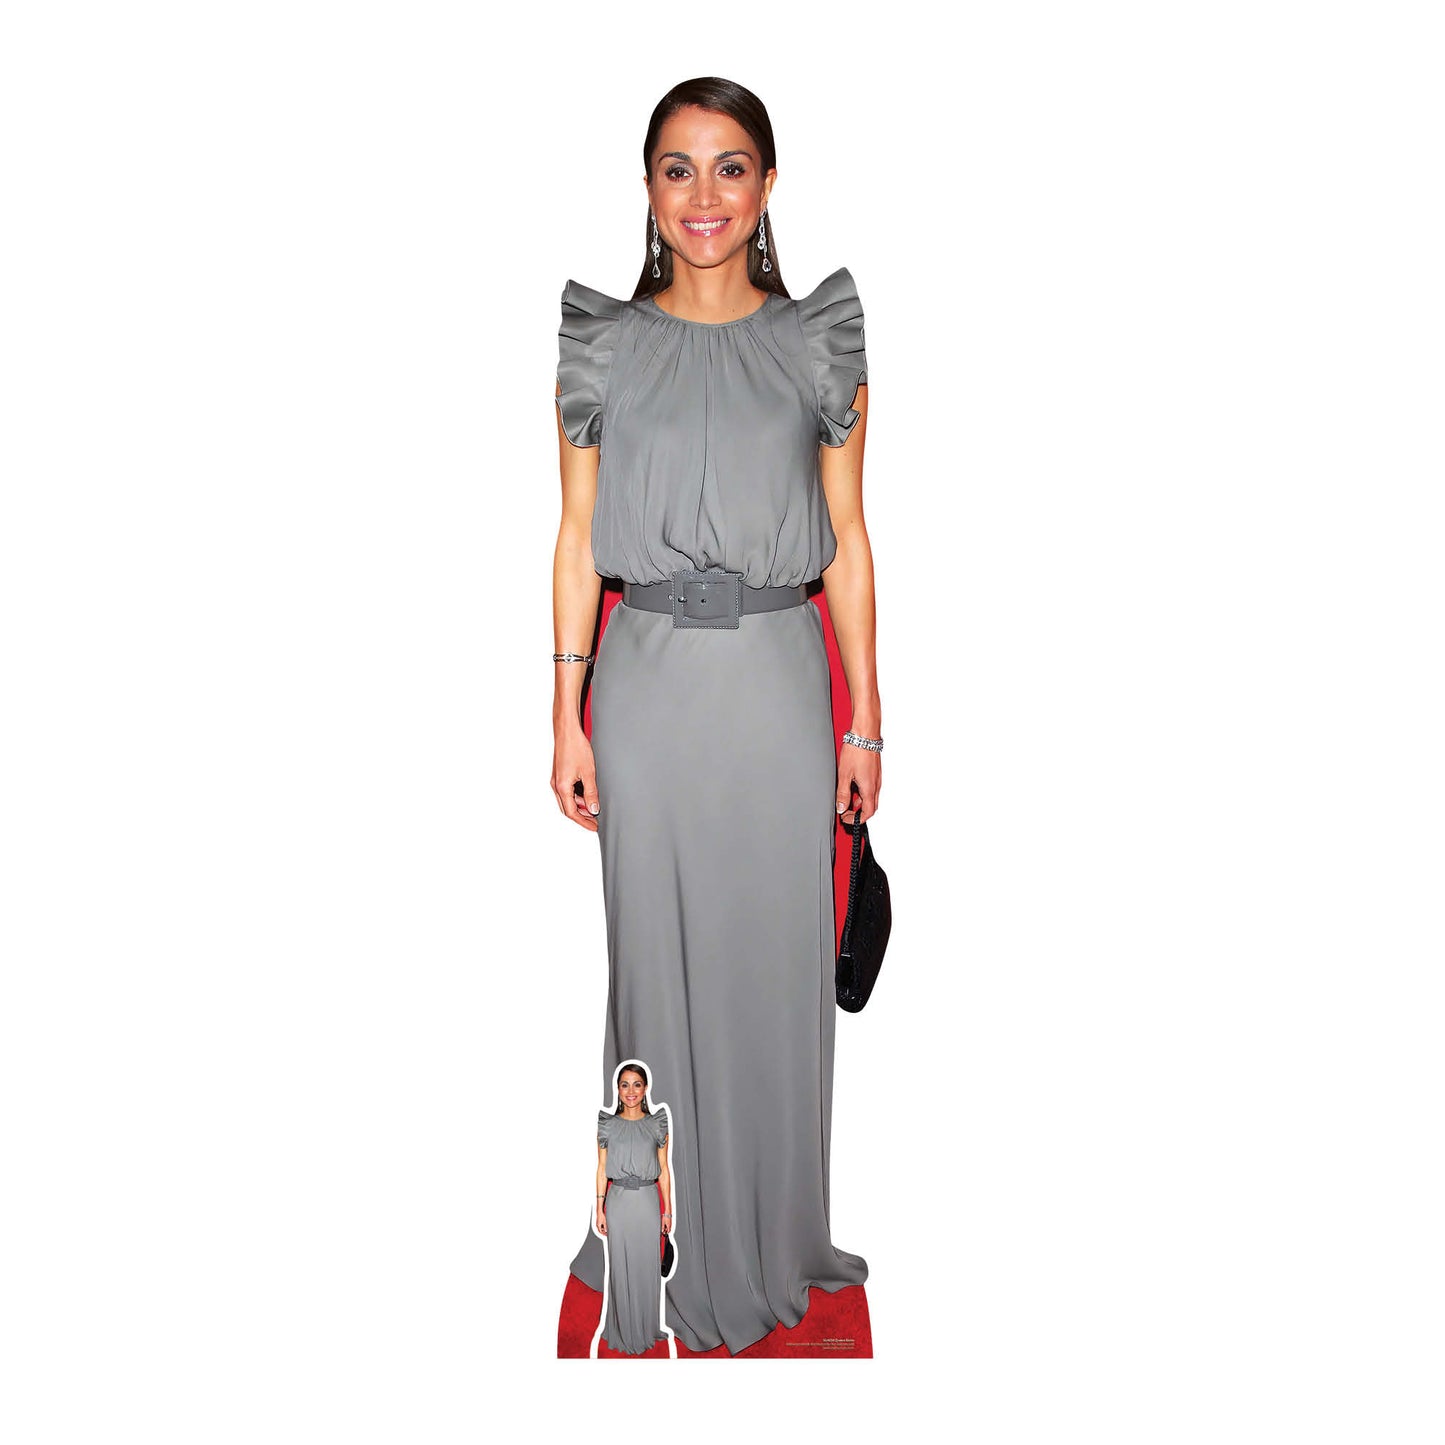 SC4034 Queen Rania of Jordan (Grey Dress) Cardboard Cut Out Height 171cm